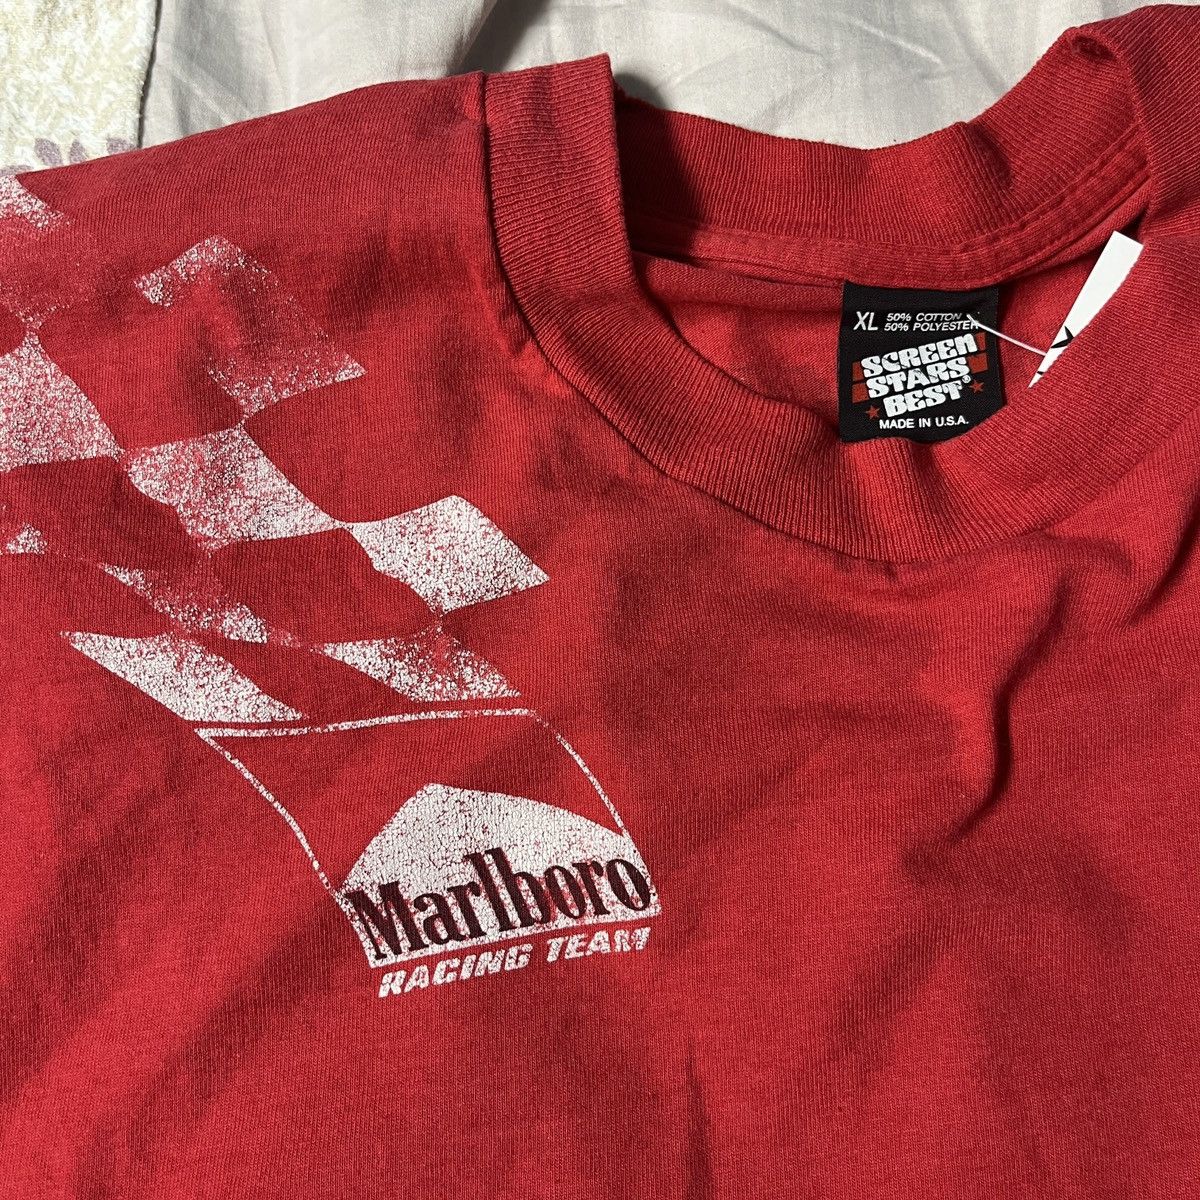 Marlboro Vintage Marlboro Cigarettes Racing Team T-Shirt Size US XL / EU 56 / 4 - 4 Preview